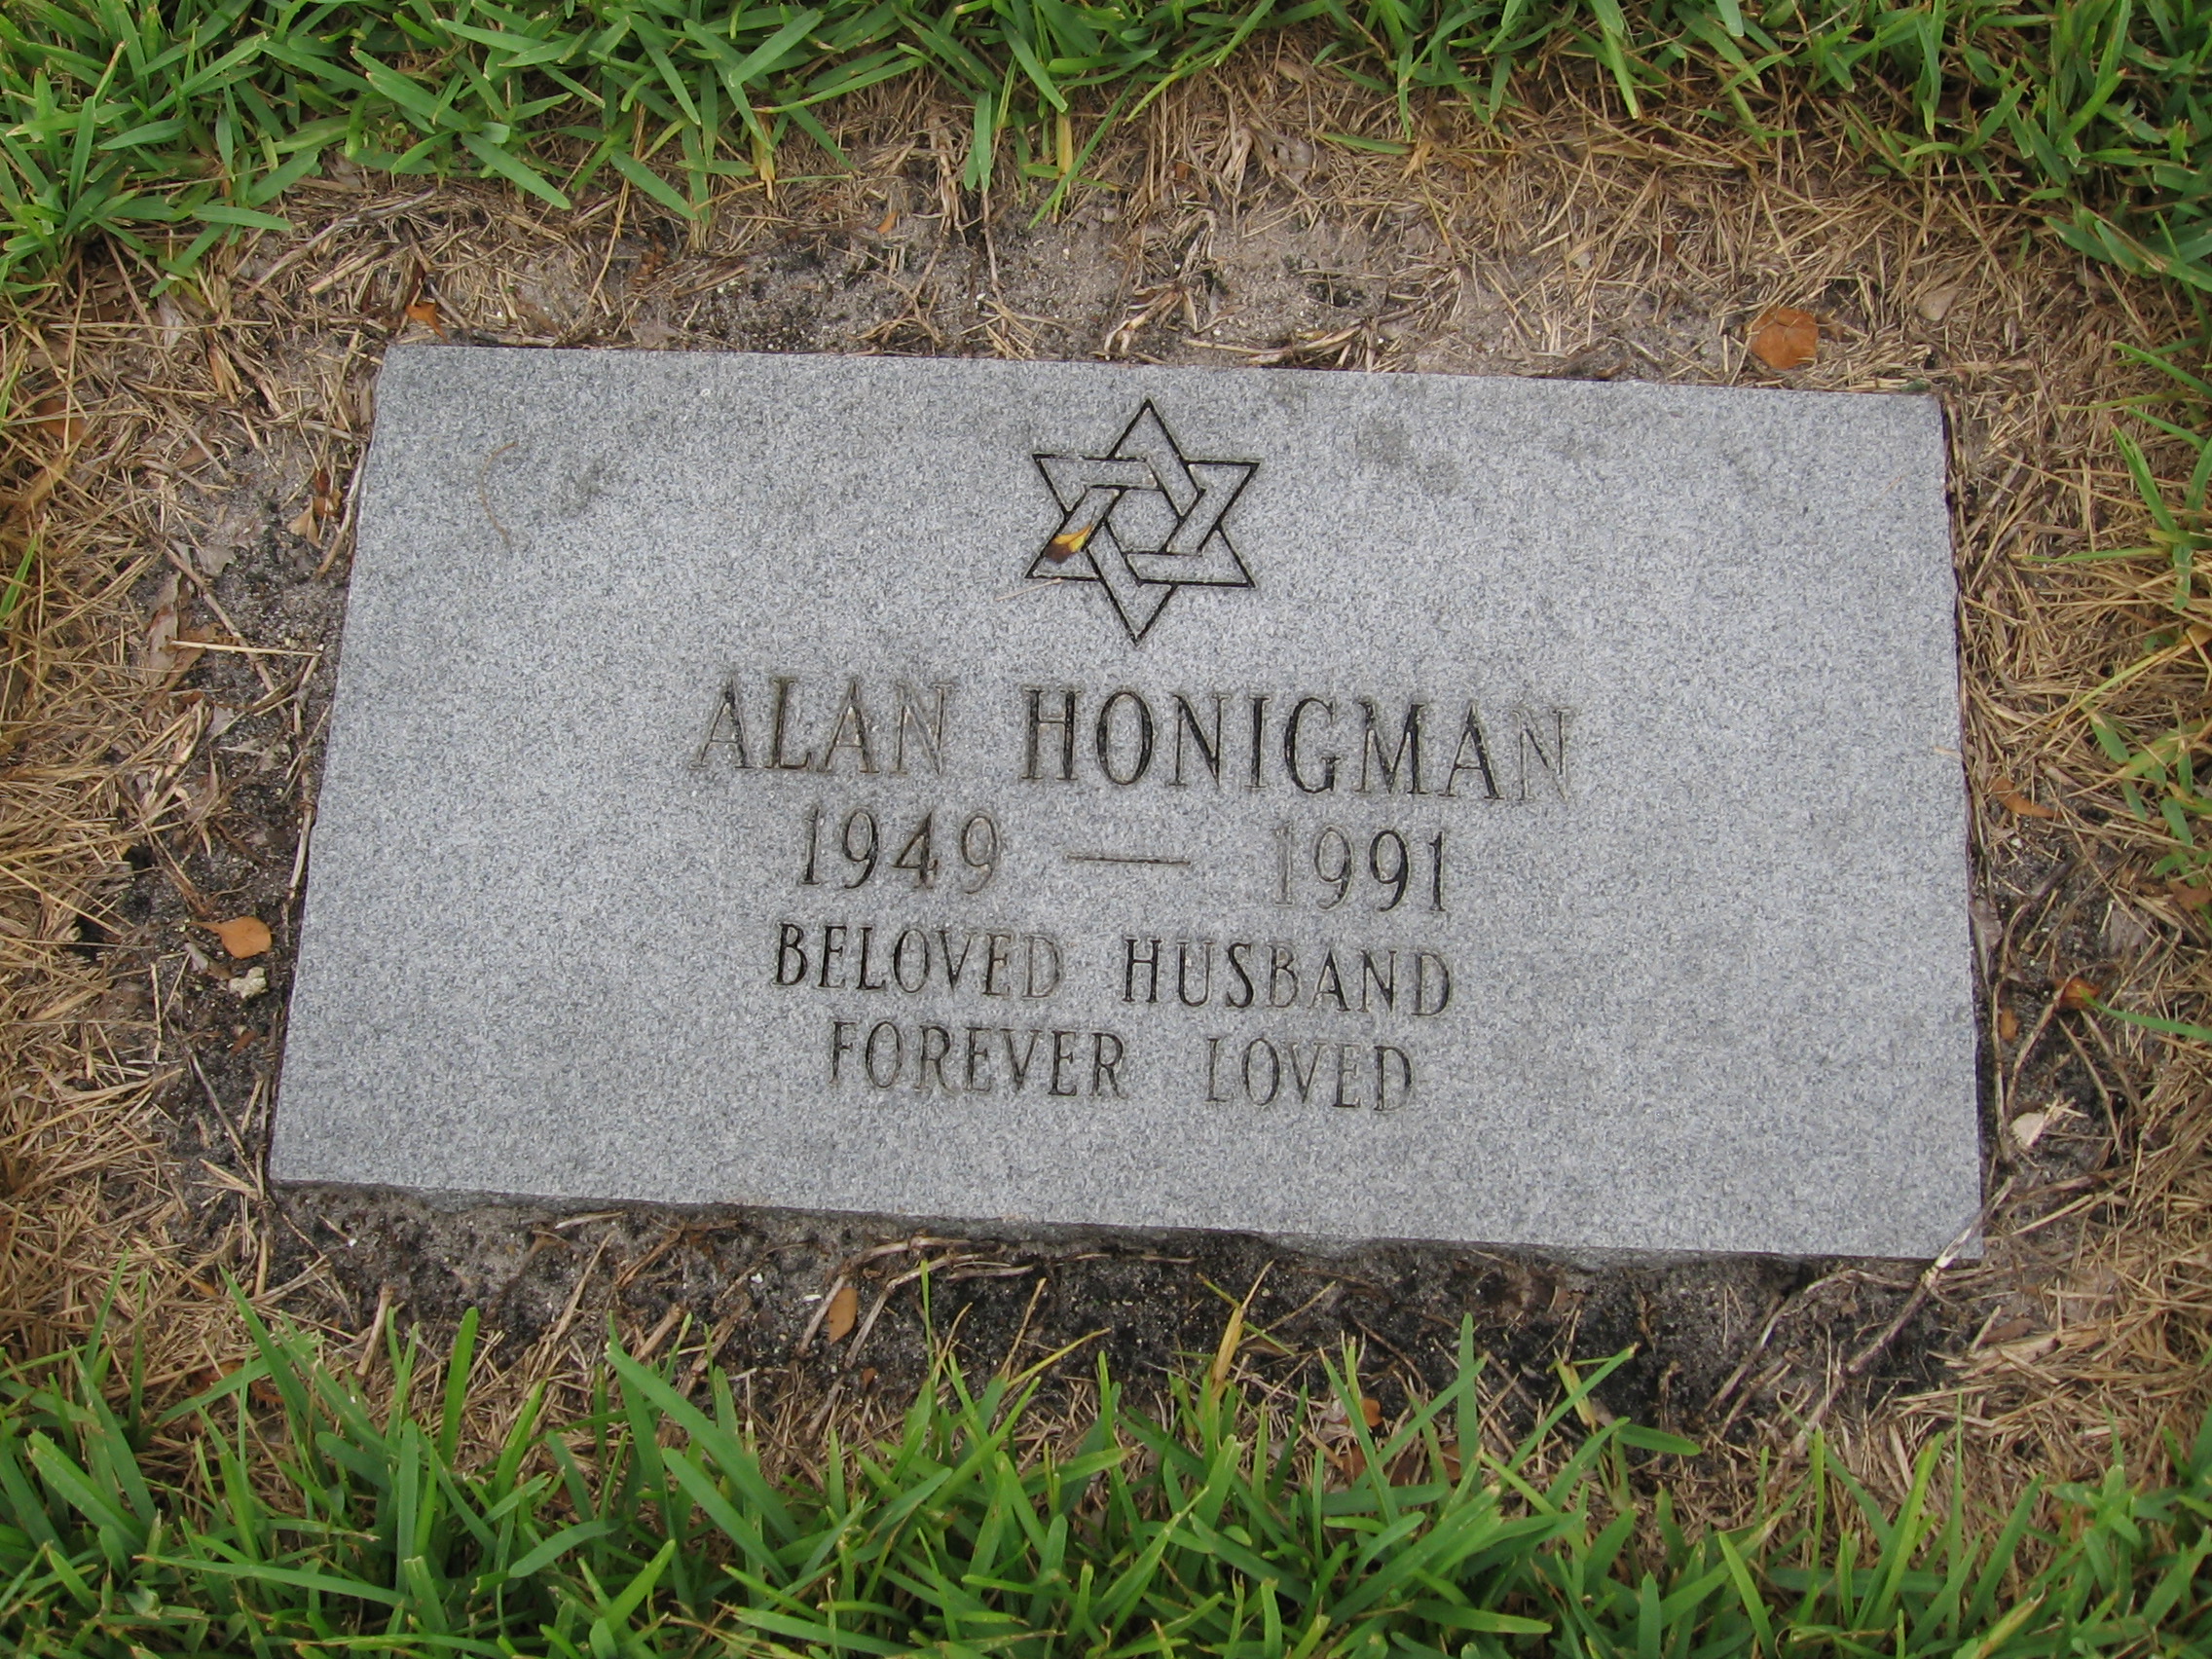 Alan Honigman